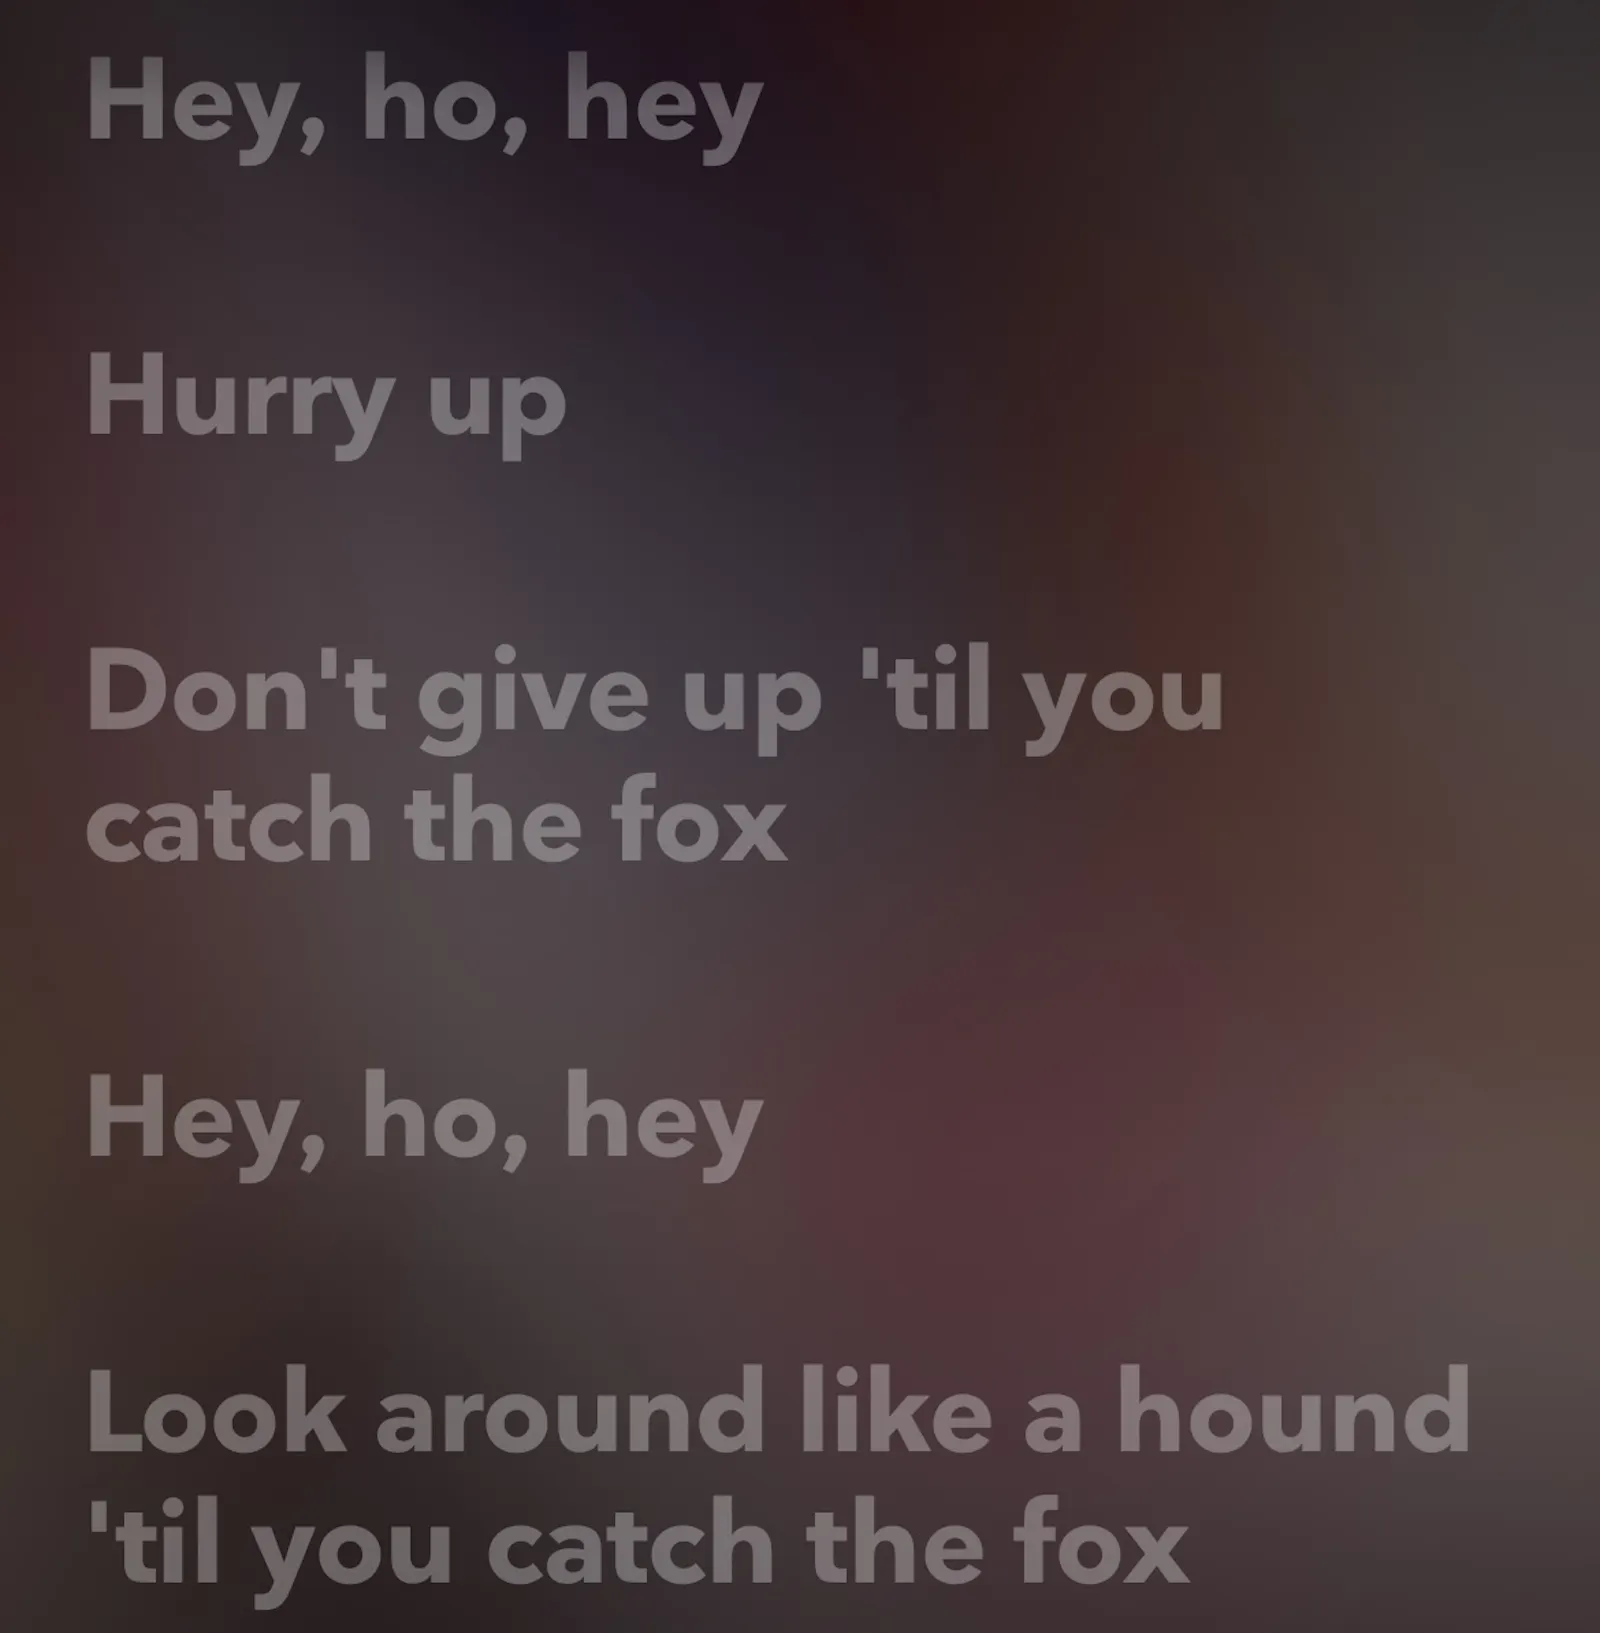 Hey, ho, hey. Hurry up. Don't give up 'til you catch the fox. Hey, ho, hey. Look around like a hound 'til you catch the fox.